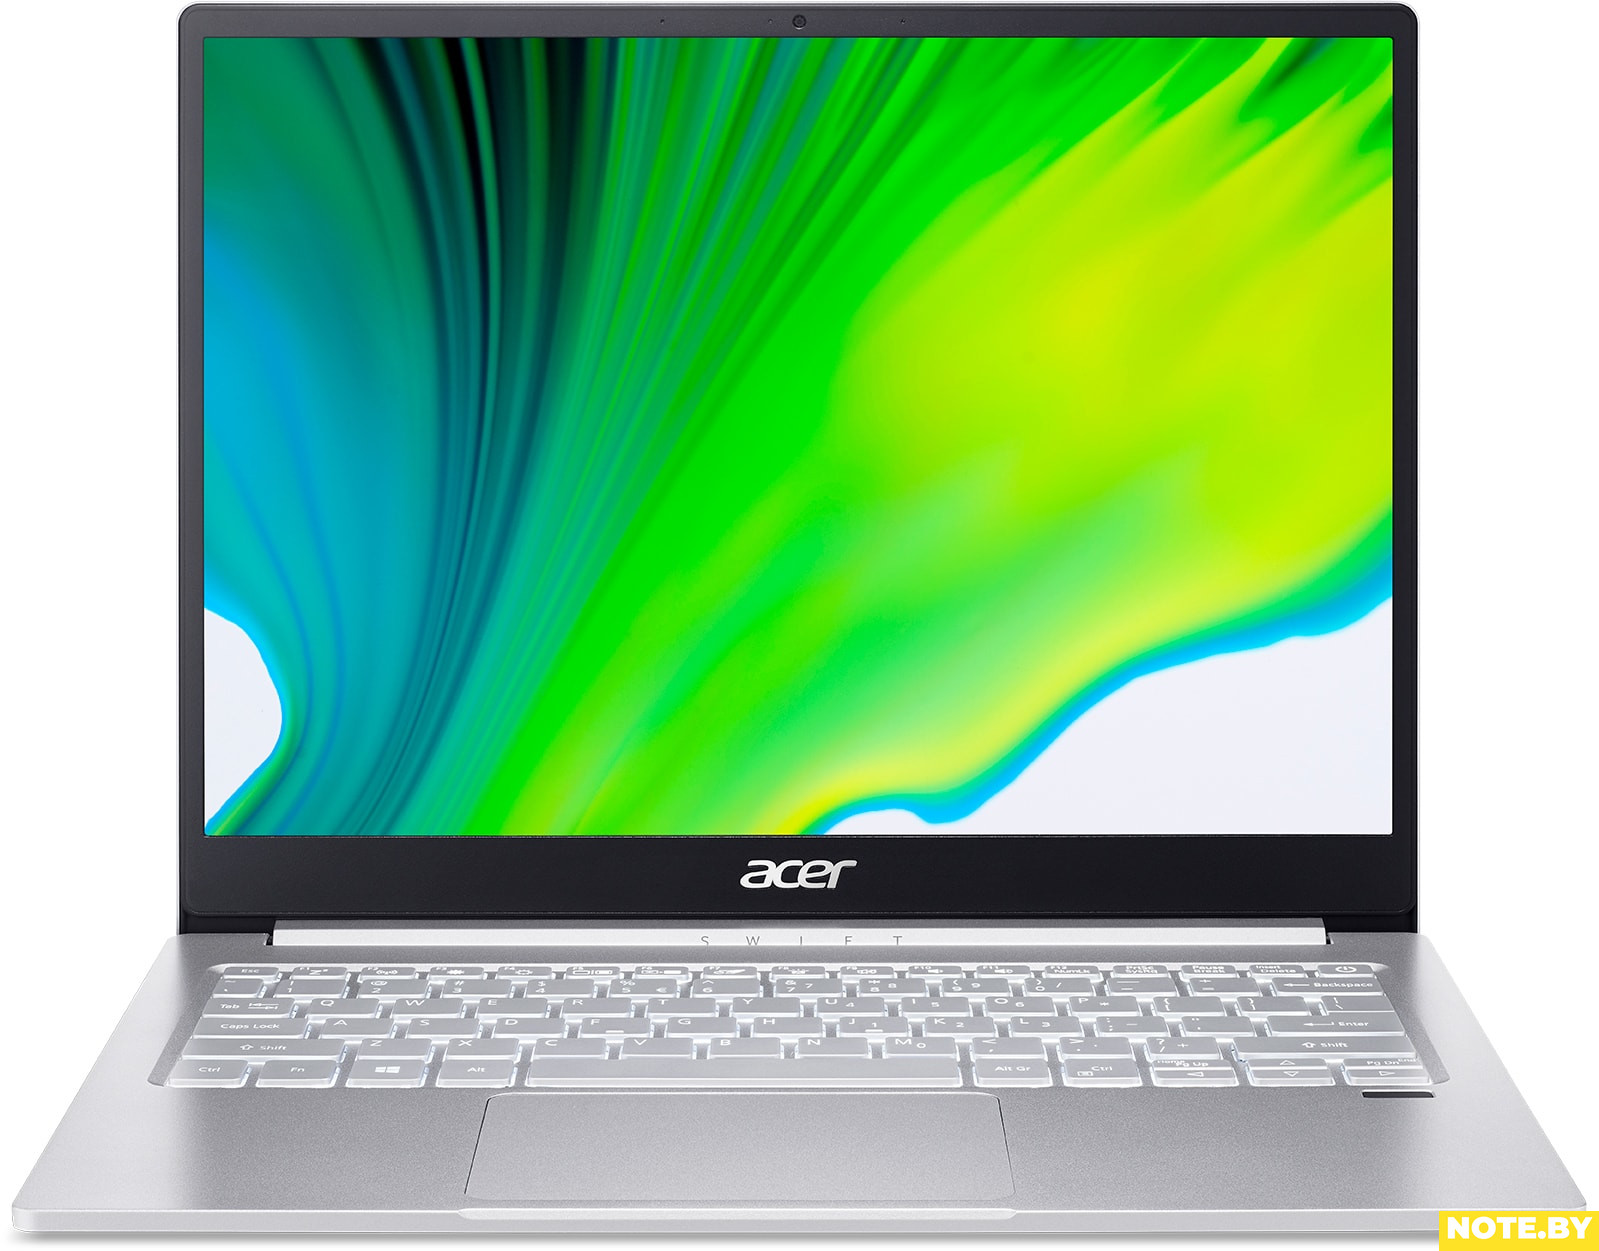 Ноутбук Acer Swift 3 SF313-53-5153 NX.A4KER.002